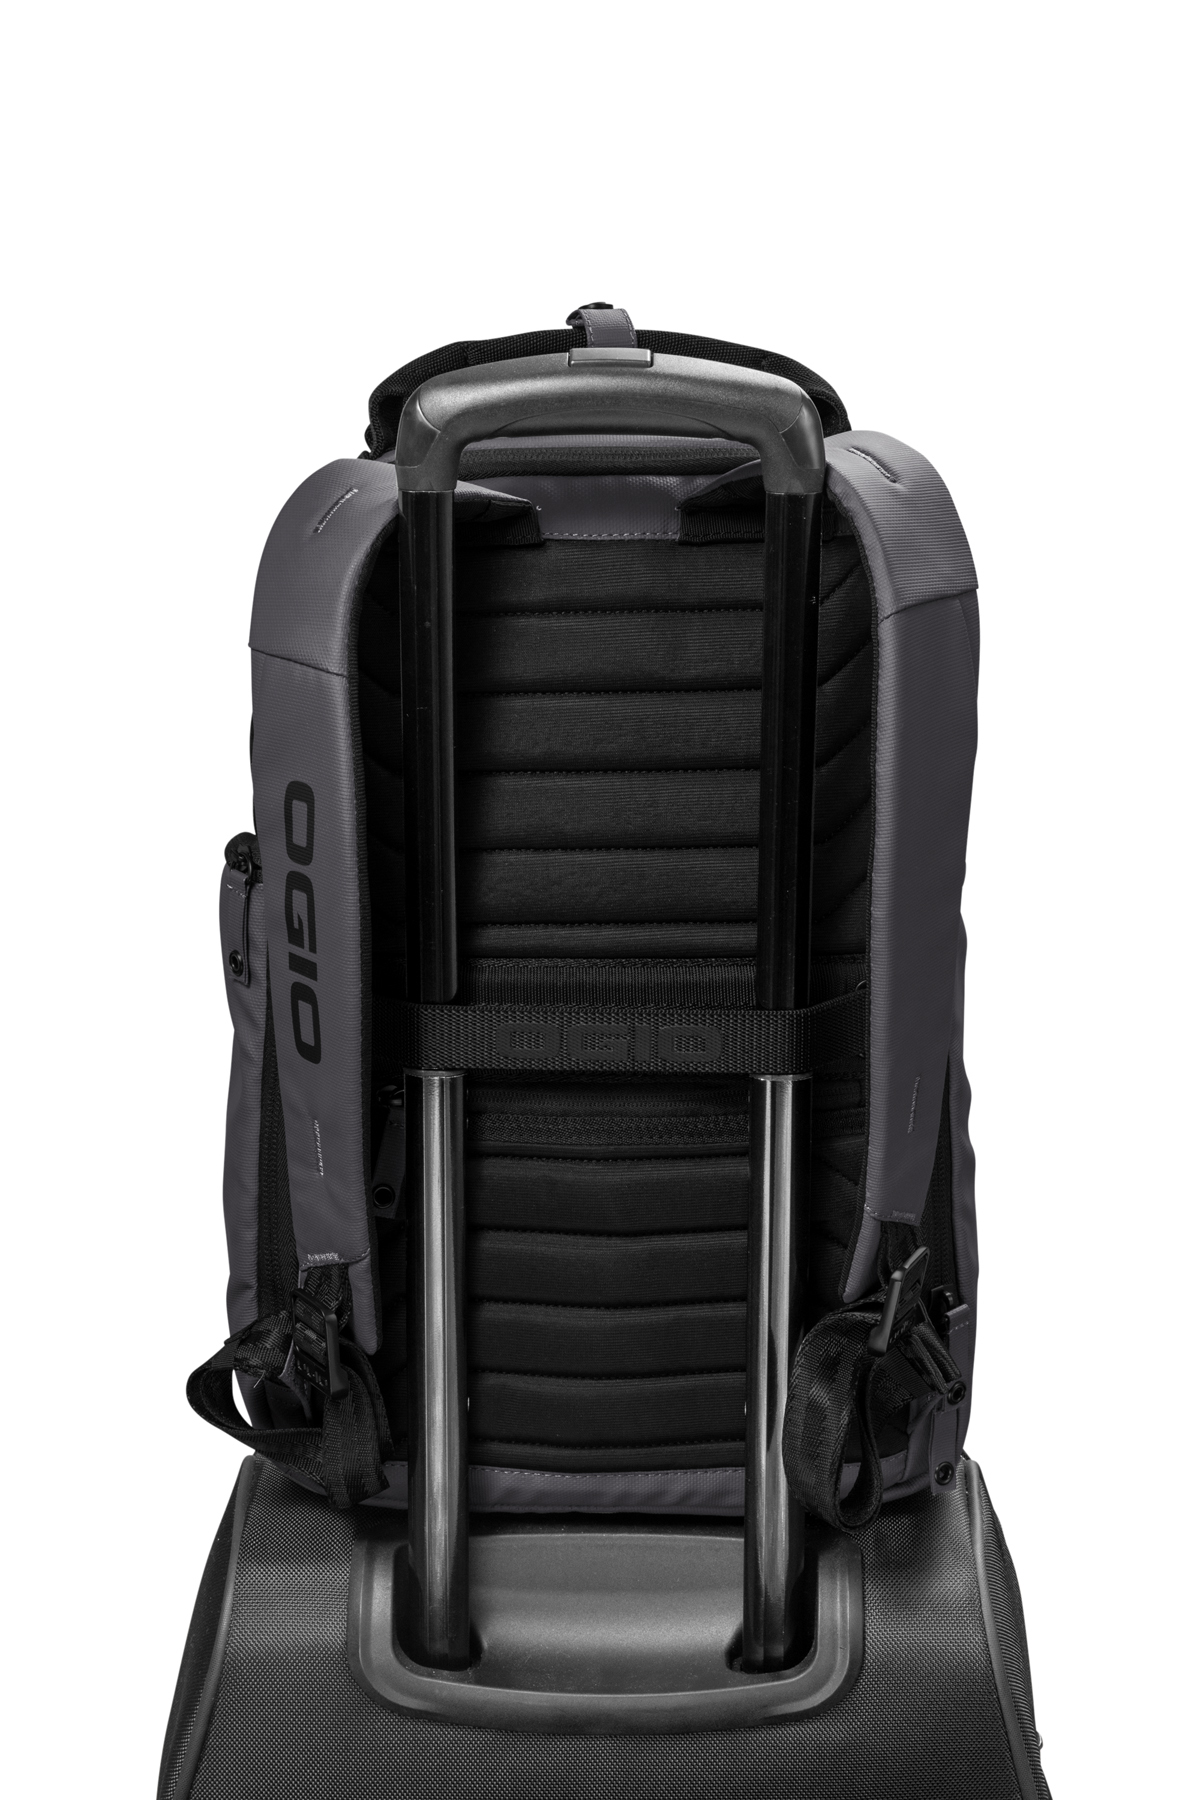 Saddle Bag With Insulation - PRODEL® TARMAC SADDLE HARD new design  ||Black,RED|best prices, worldwide delivery prodelbag.com